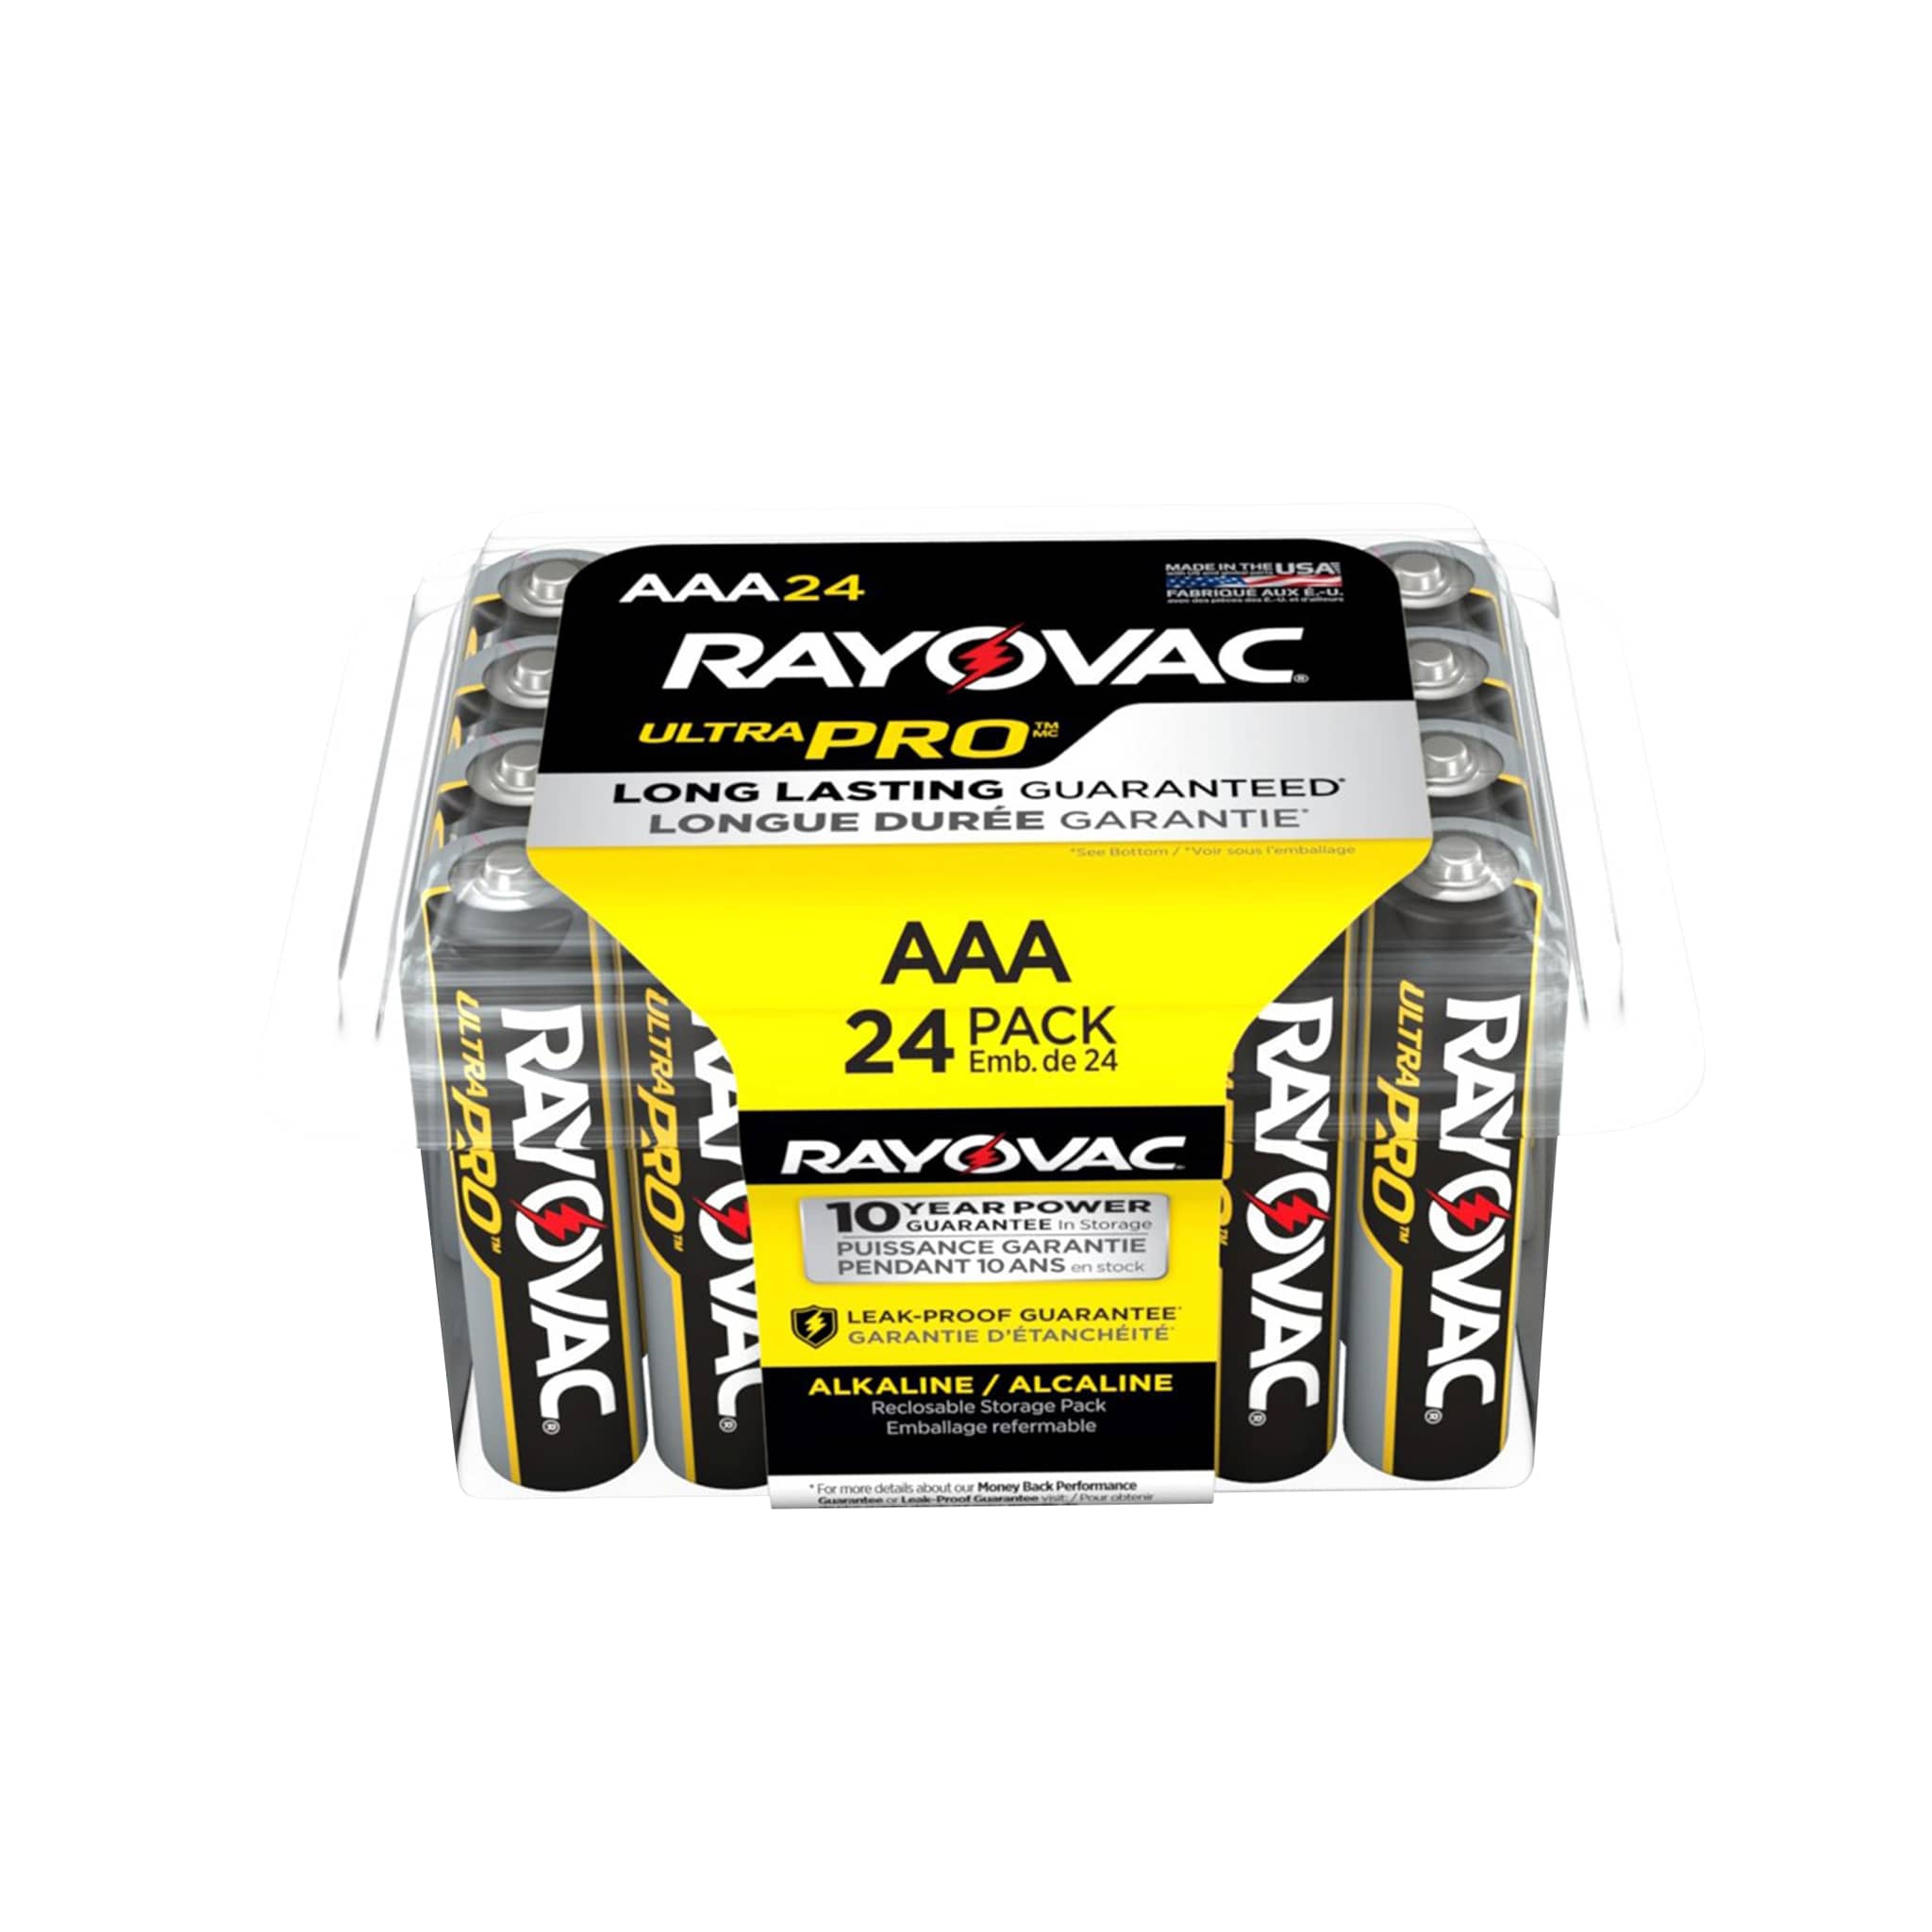 Rayovac Ultra Pro Alkaline AAA Batteries - 24 Pack